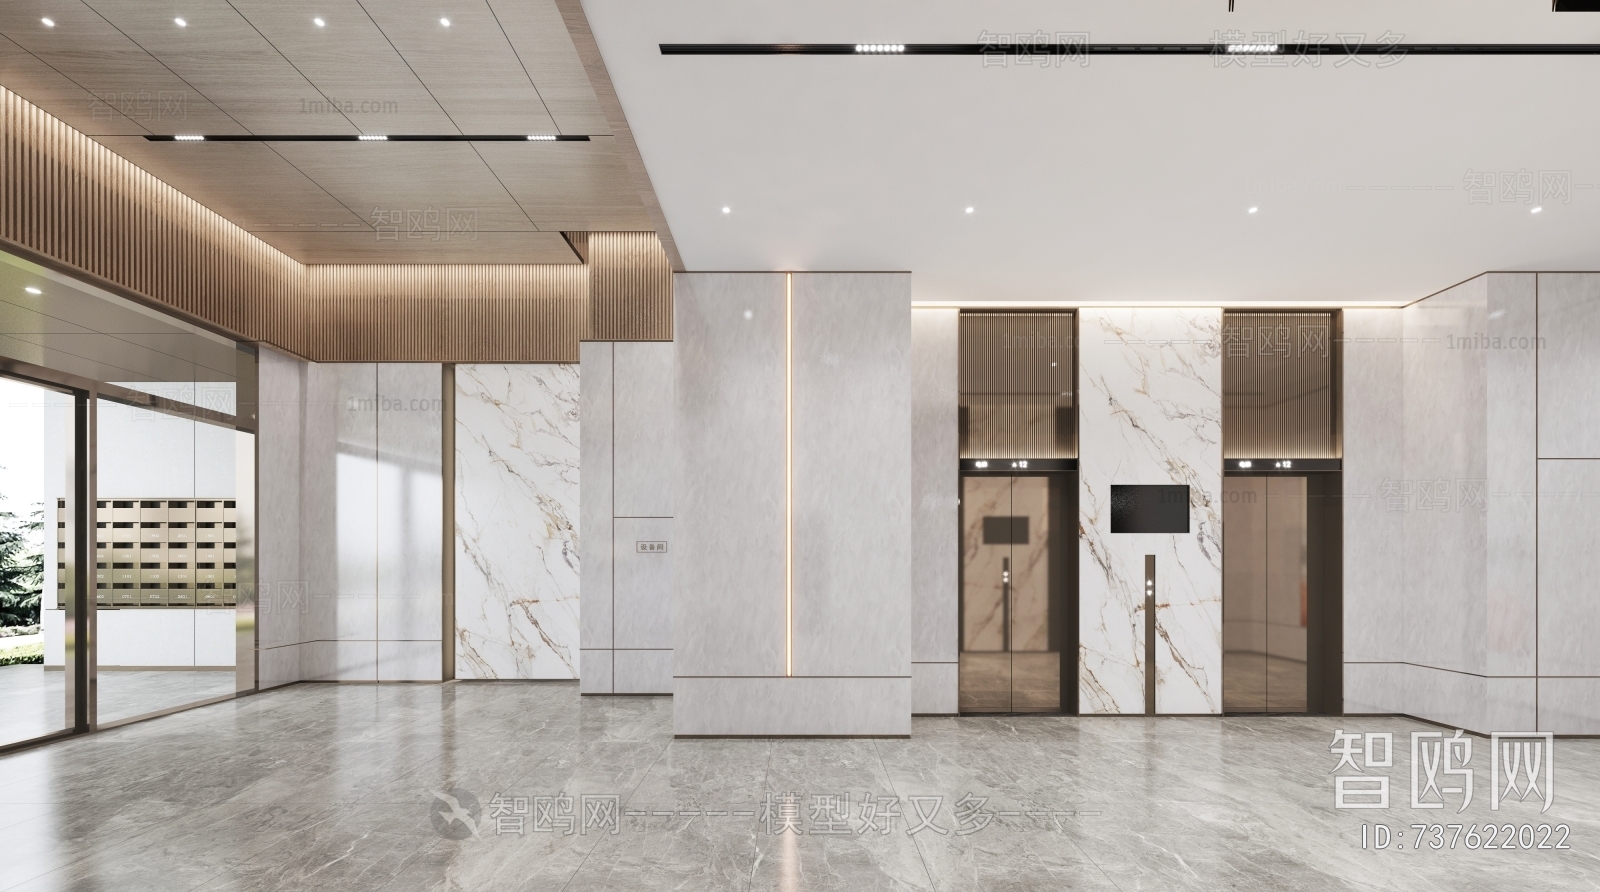 Modern Office Elevator Hall